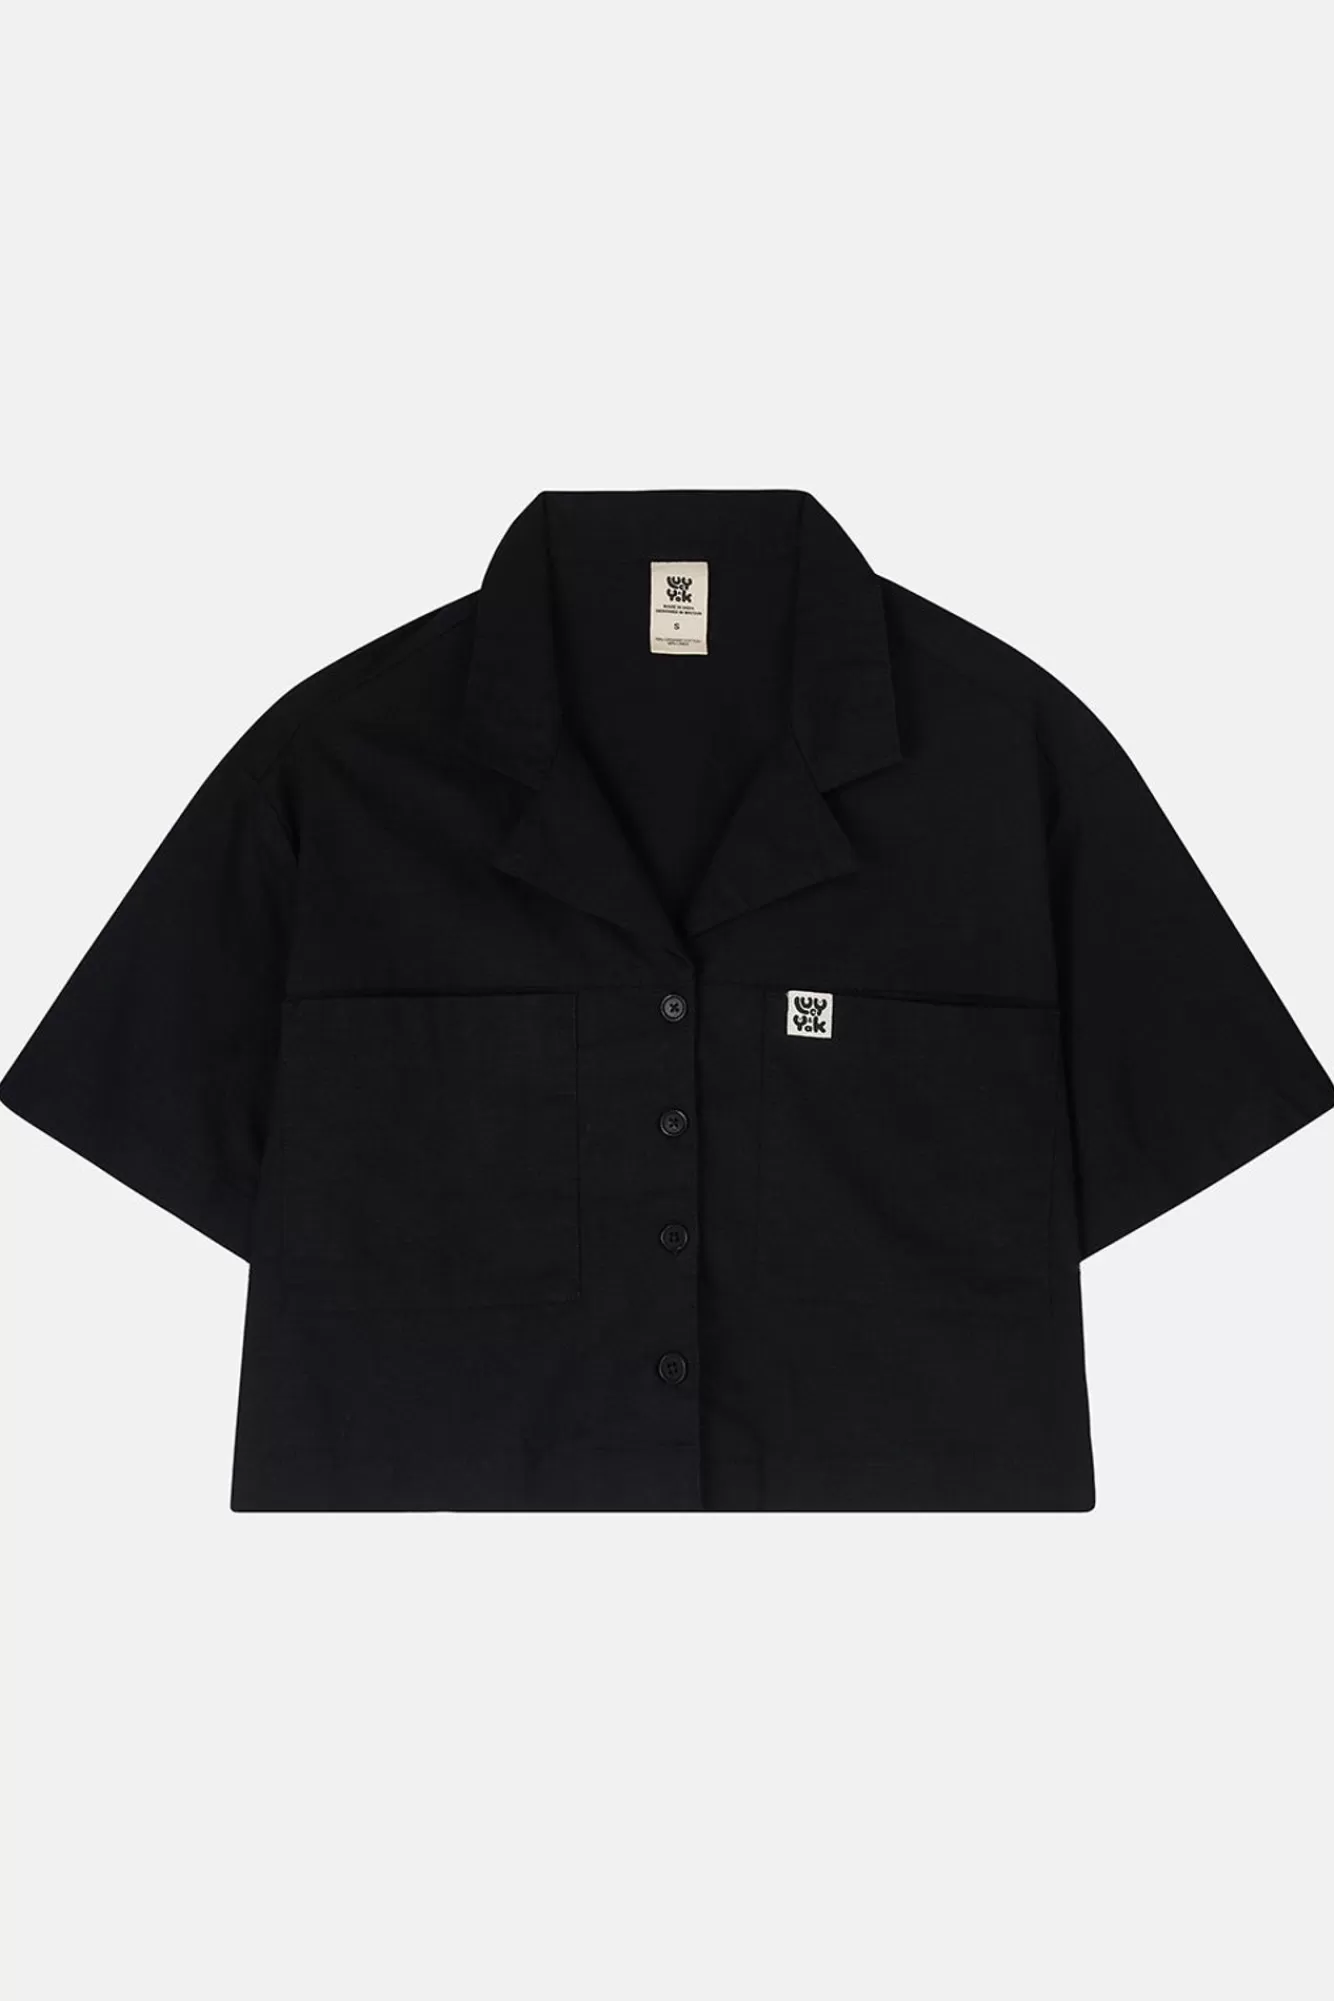 Alfie Shirt: Organic Cotton & Linen - Black-Lucy & Yak Fashion